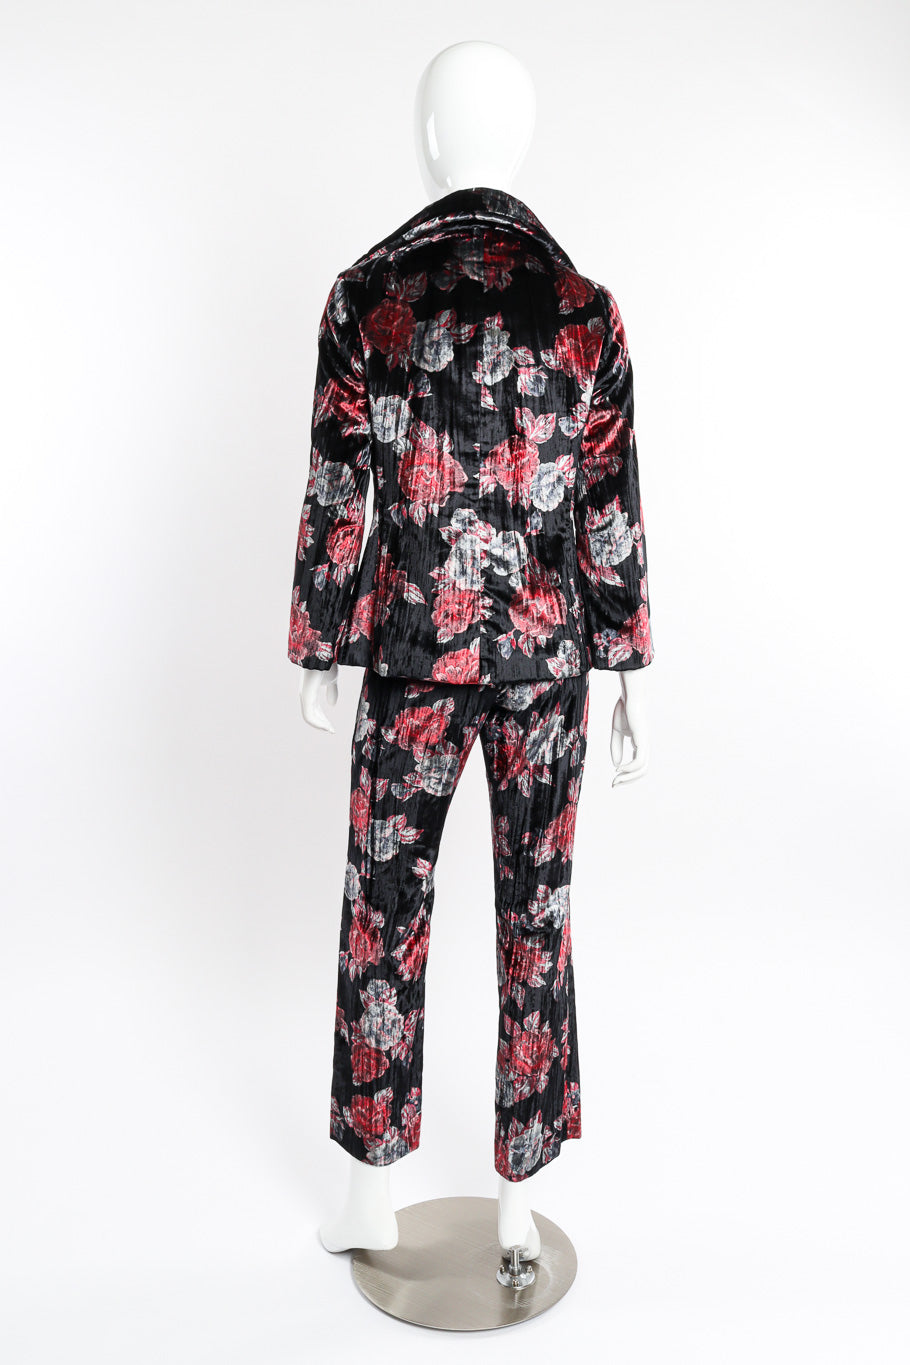 Dolce and Gabbana Floral Velvet Jacket and Pant Set back view on mannequin @recessla